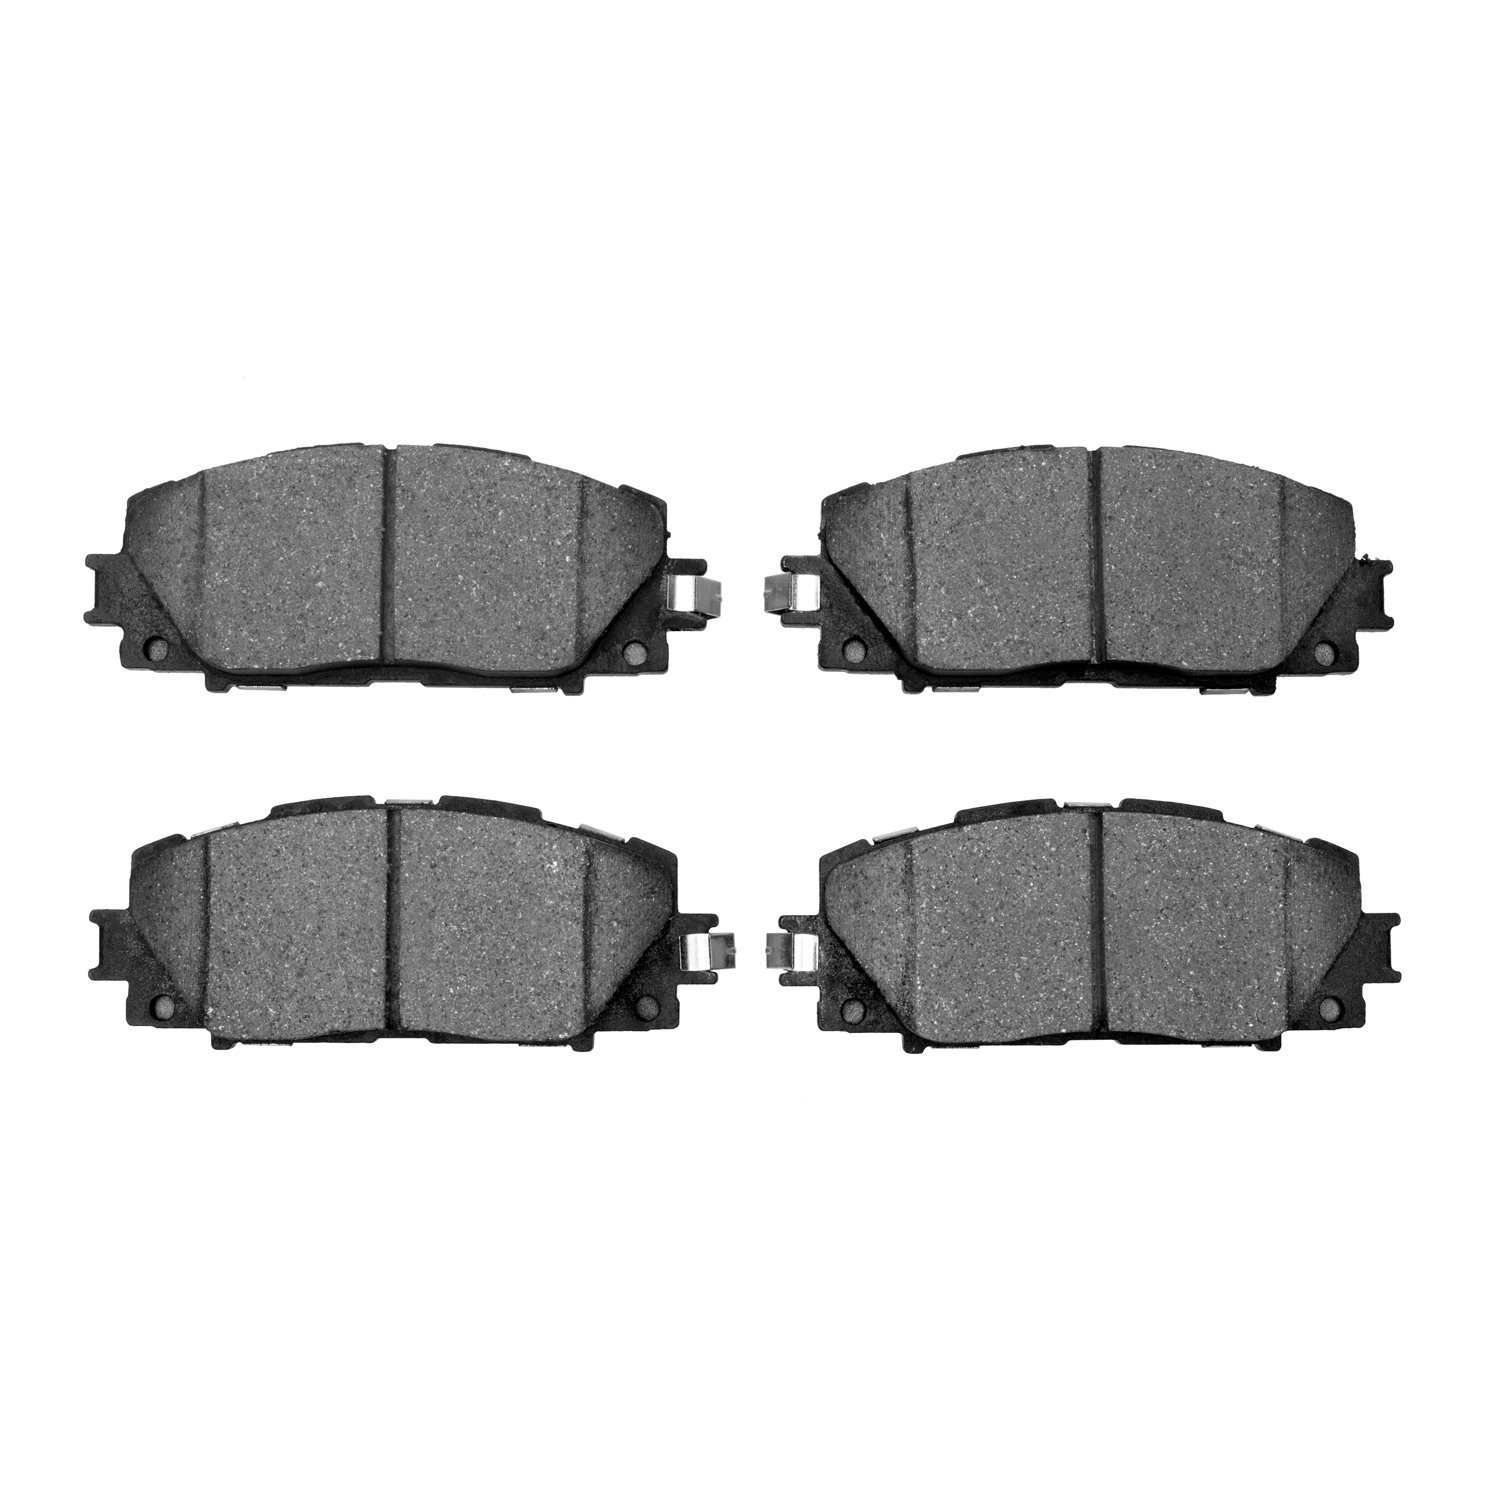 1310-1184-10 3000-Series Ceramic Brake Pads, Fits Select Lexus/Toyota/Scion, Position: Front